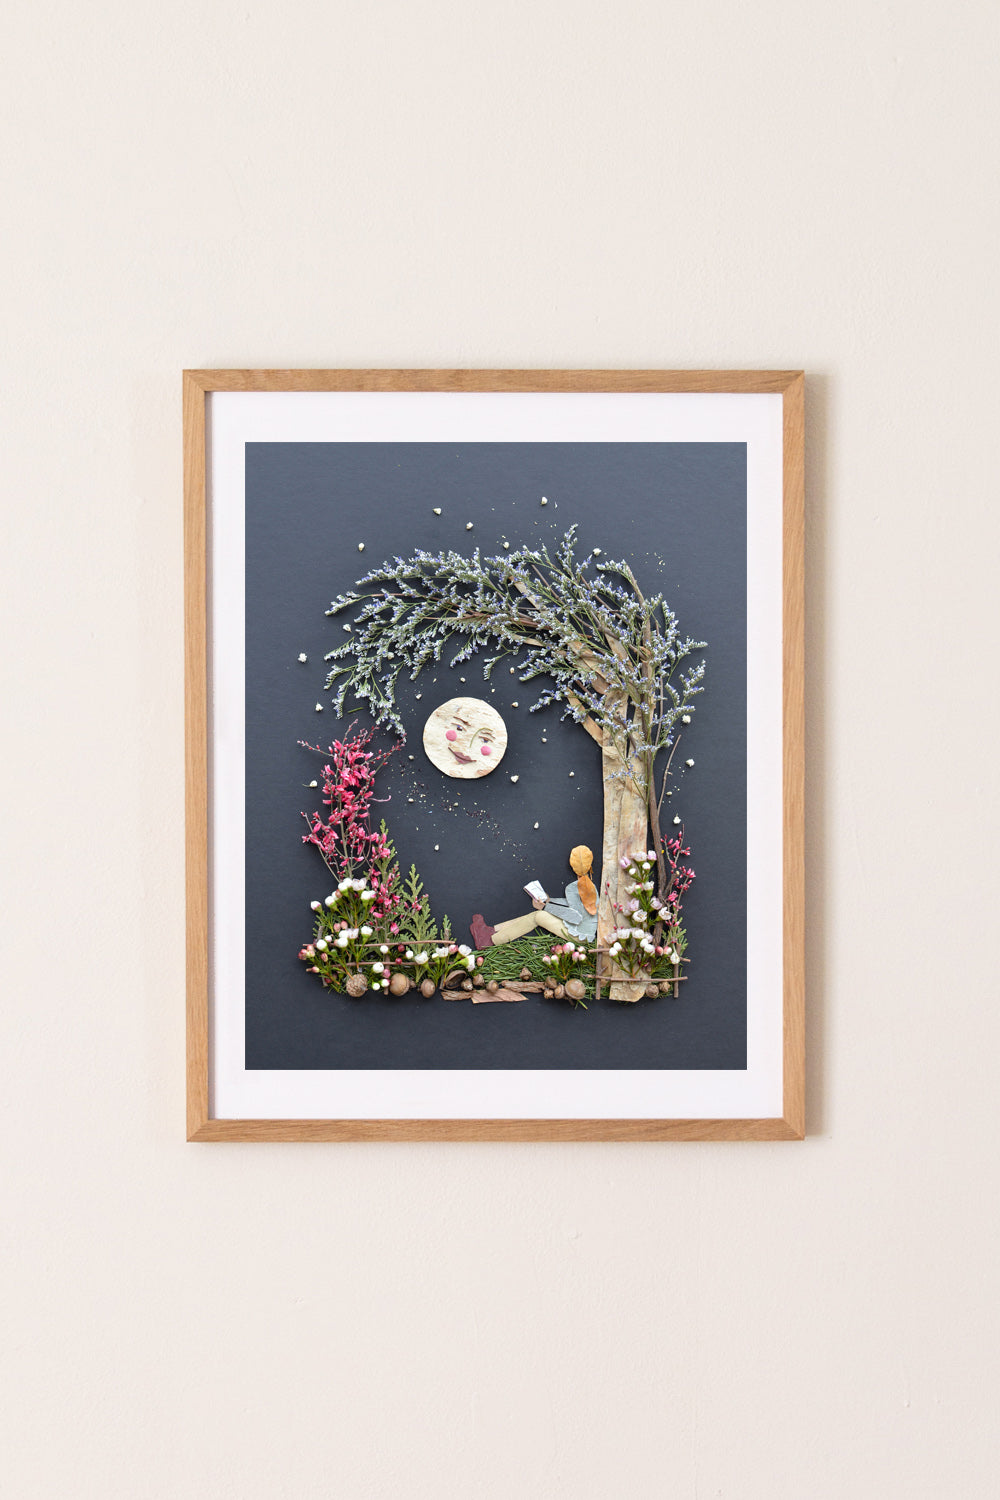 "The Moon & Me" Flower Print